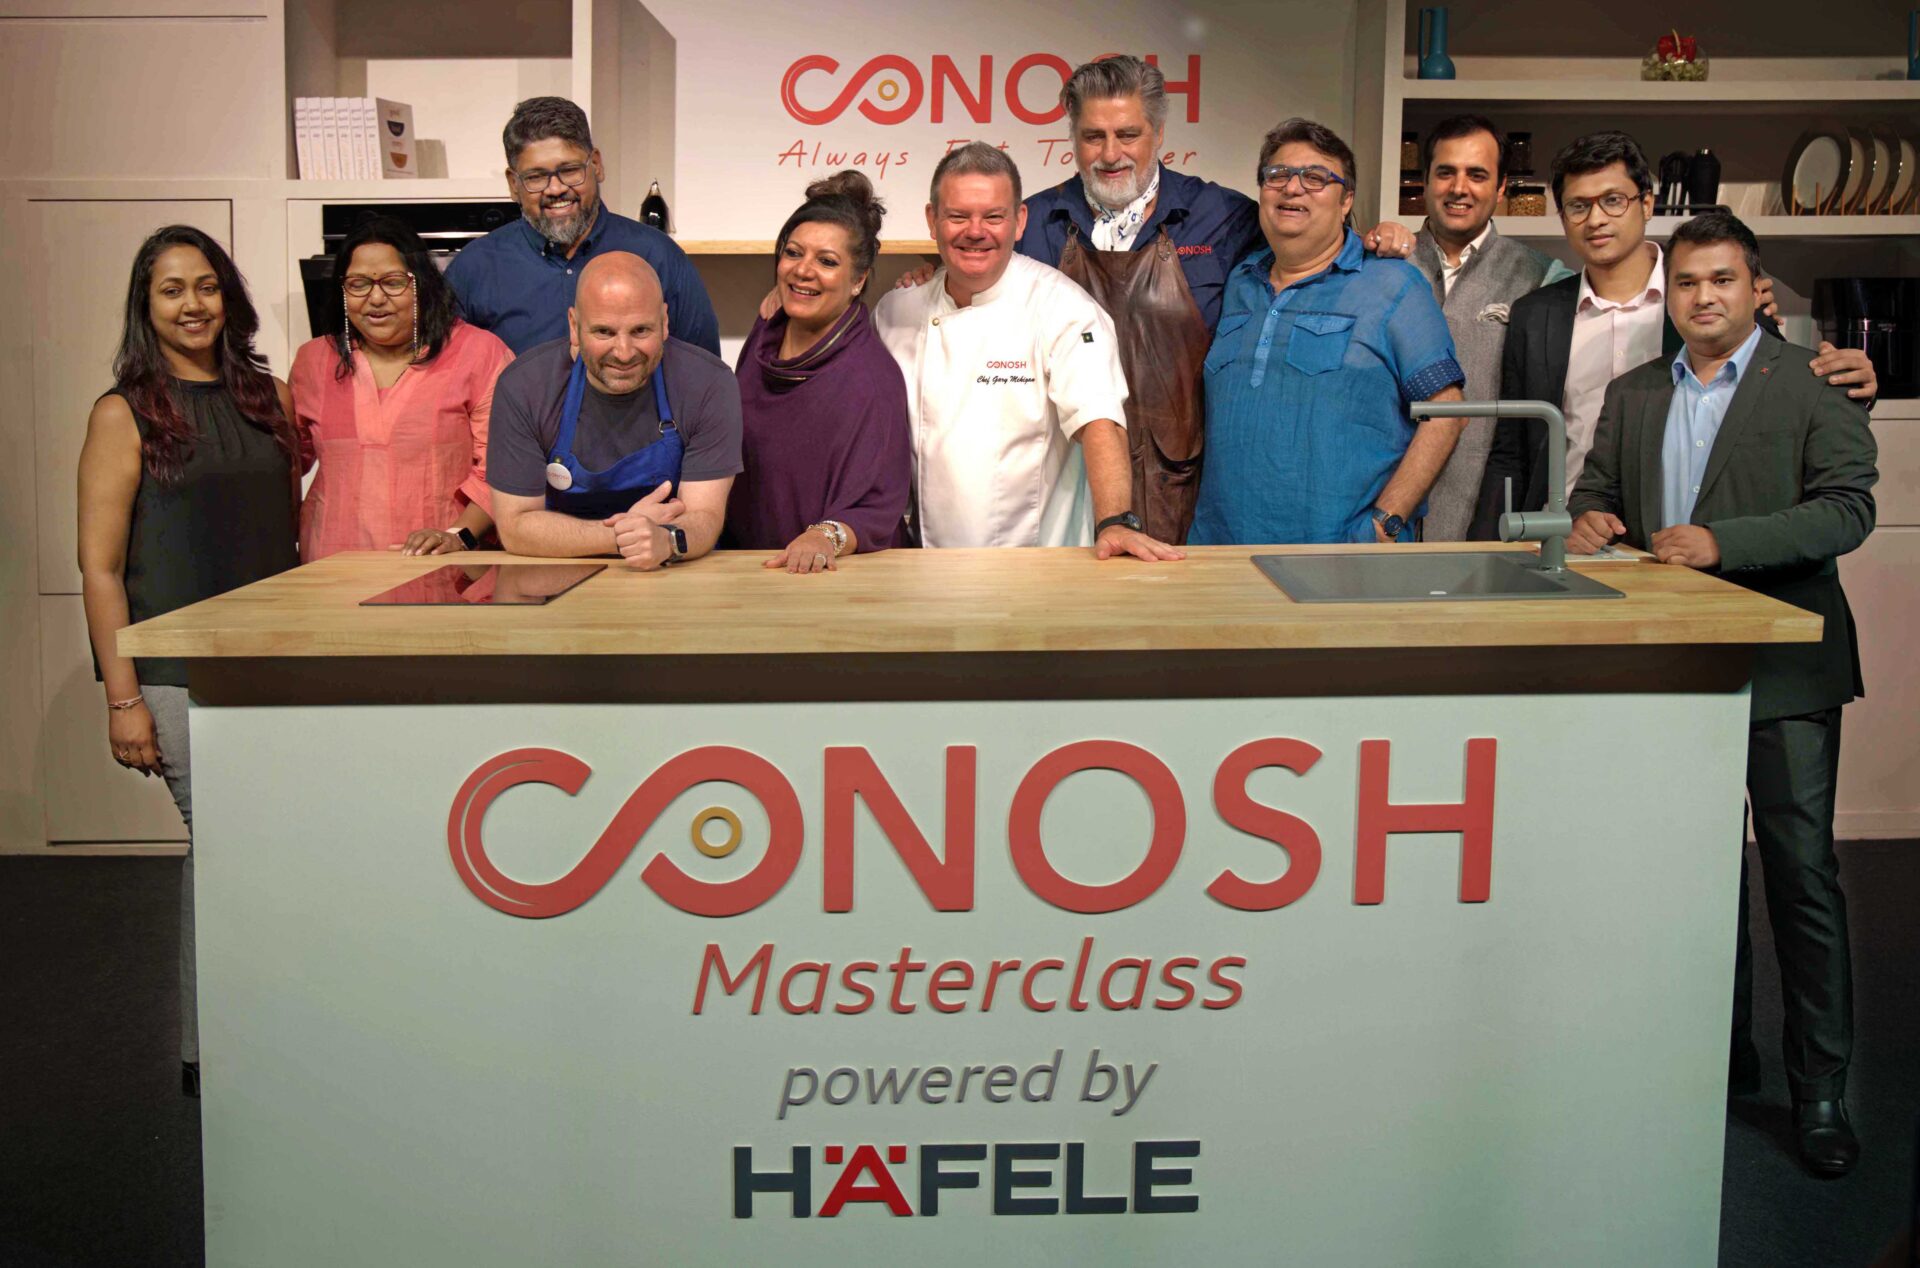 Former Master Chef Australia showcased Conosh Masterclass with Hafele Appliances